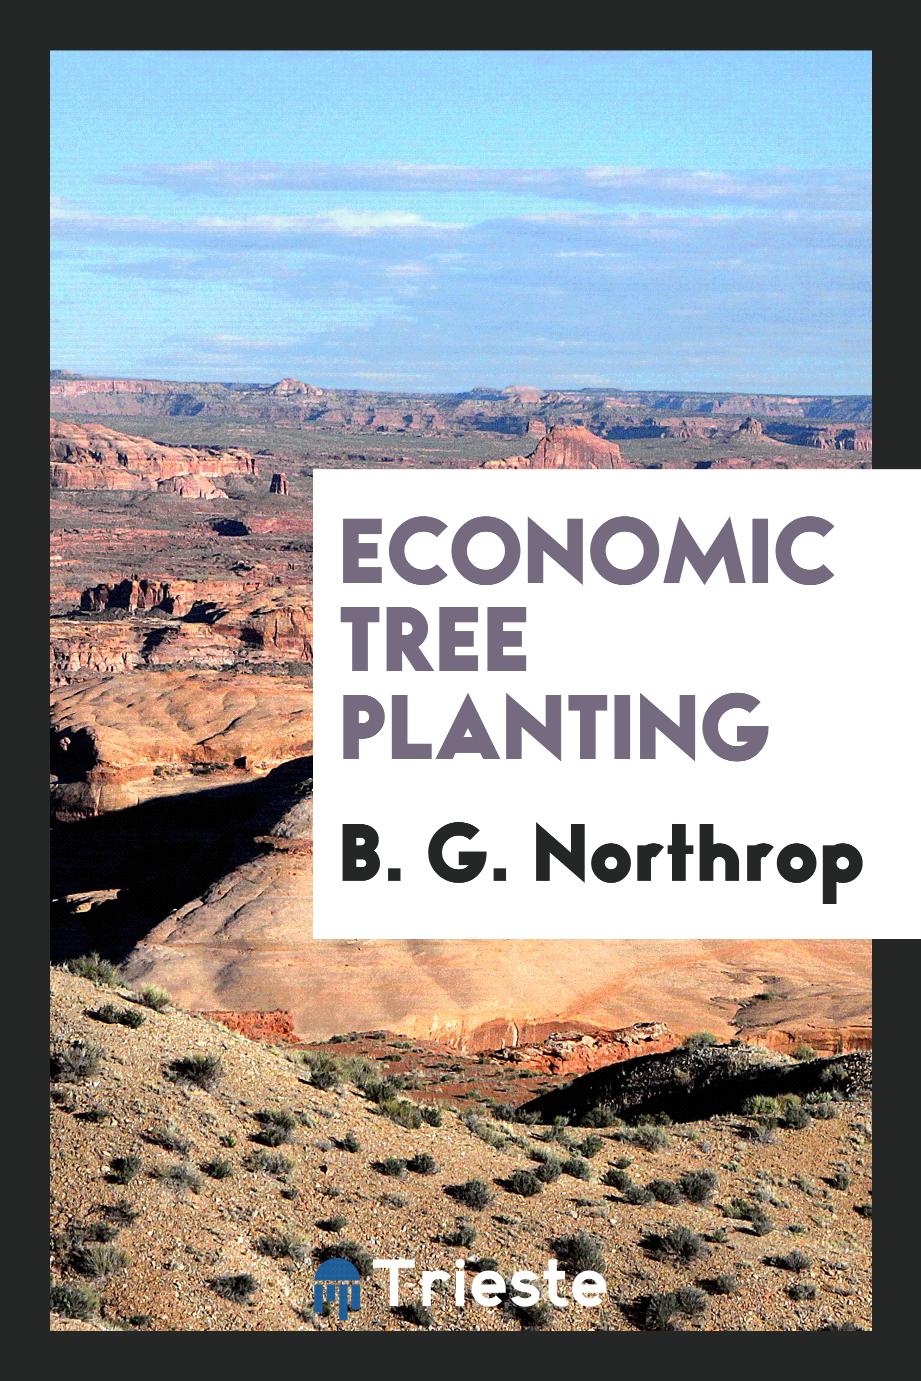 Economic Tree planting